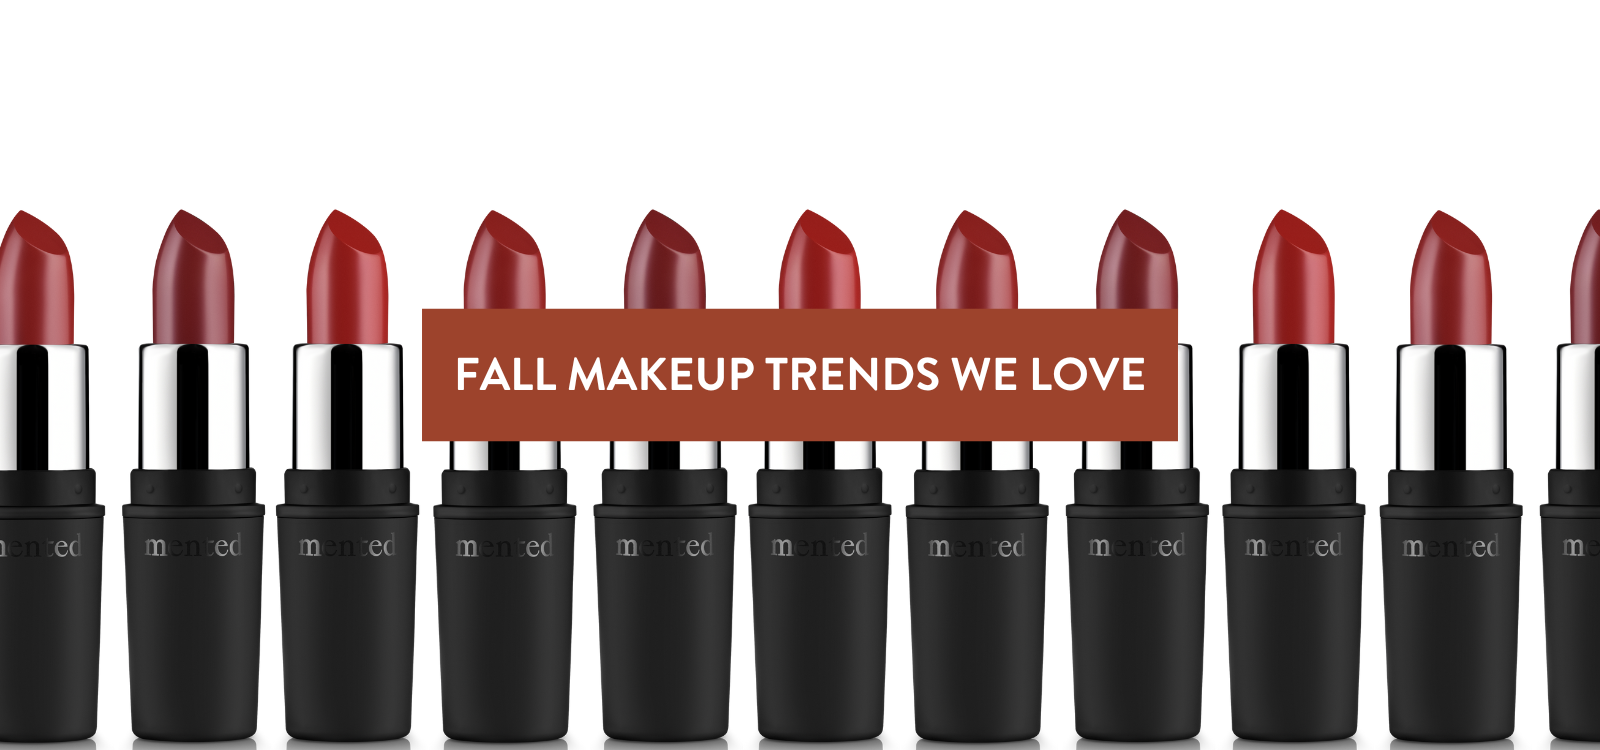 Fall Makeup Trends We Love